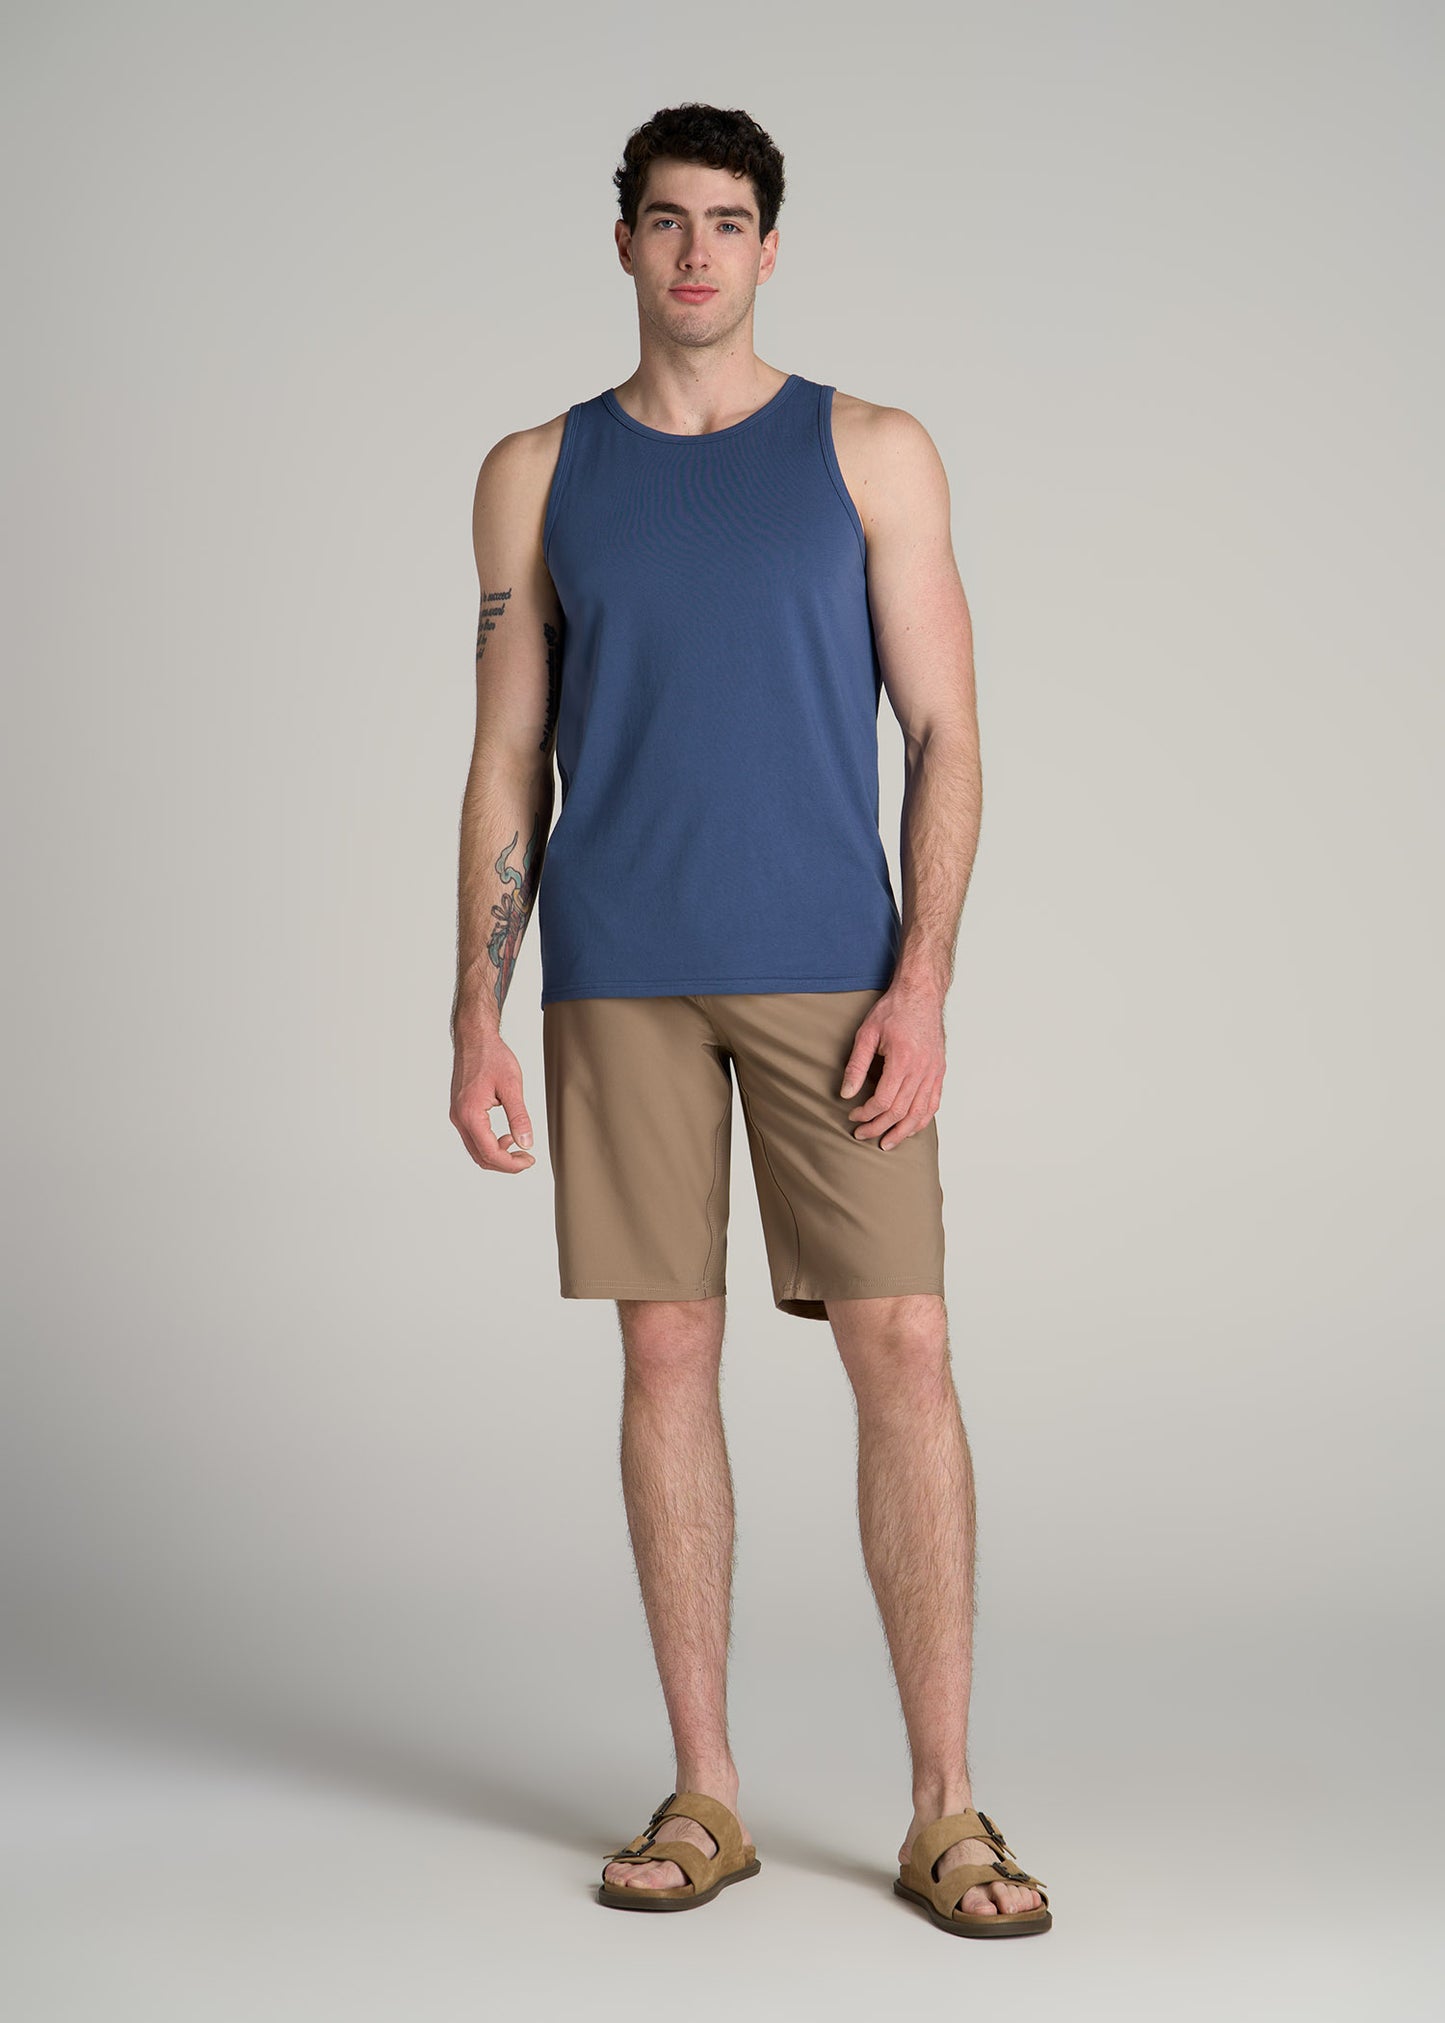 The Essentials: Men's Tall SLIM-FIT Beach Tank Top in Steel Blue